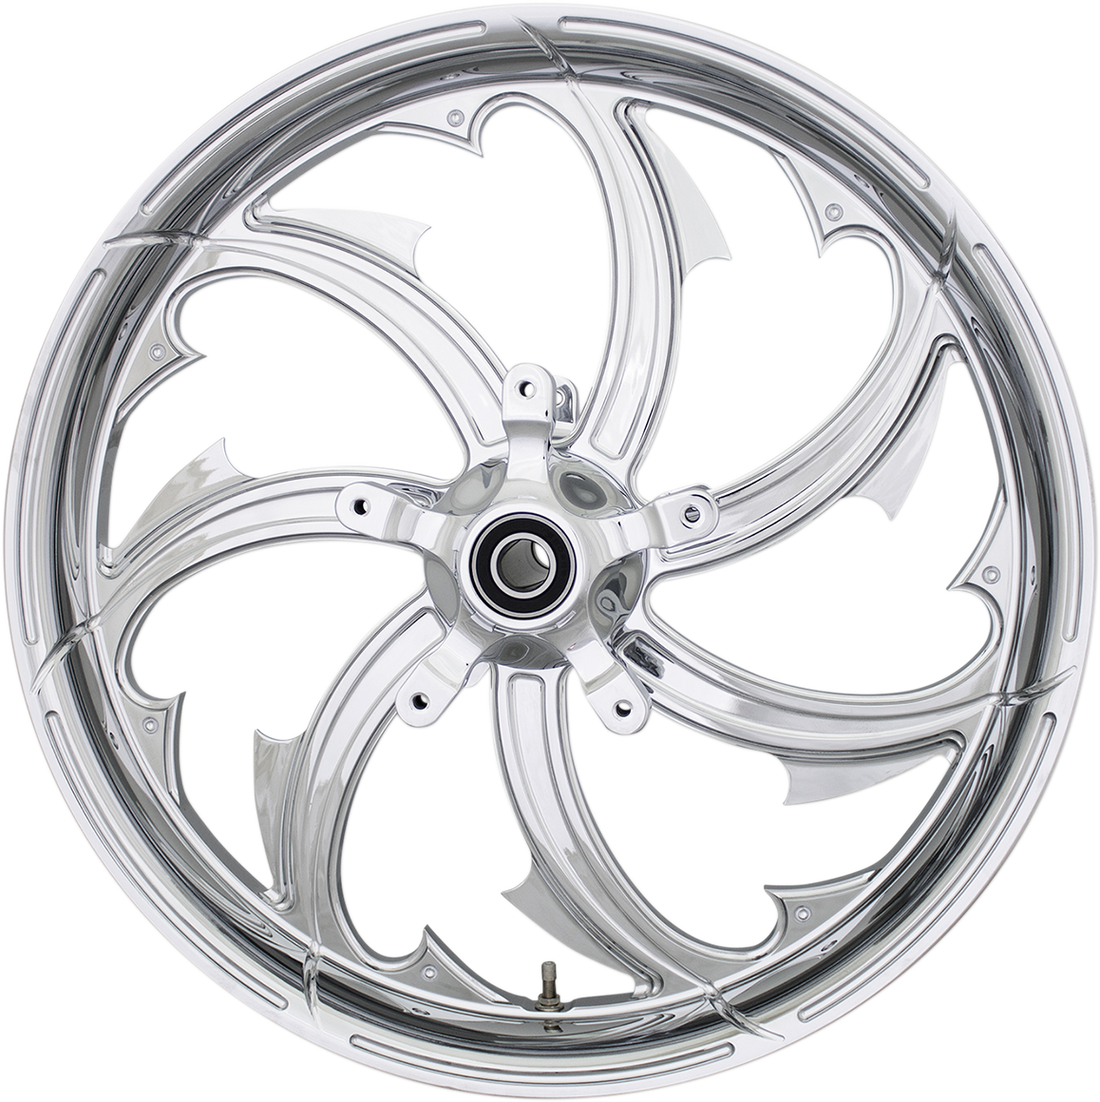 0201-2410 - COASTAL MOTO Front Wheel - Fury - Dual Disc/ABS - Chrome - 23"x3.75" - FL FRY-233-CH-ABST